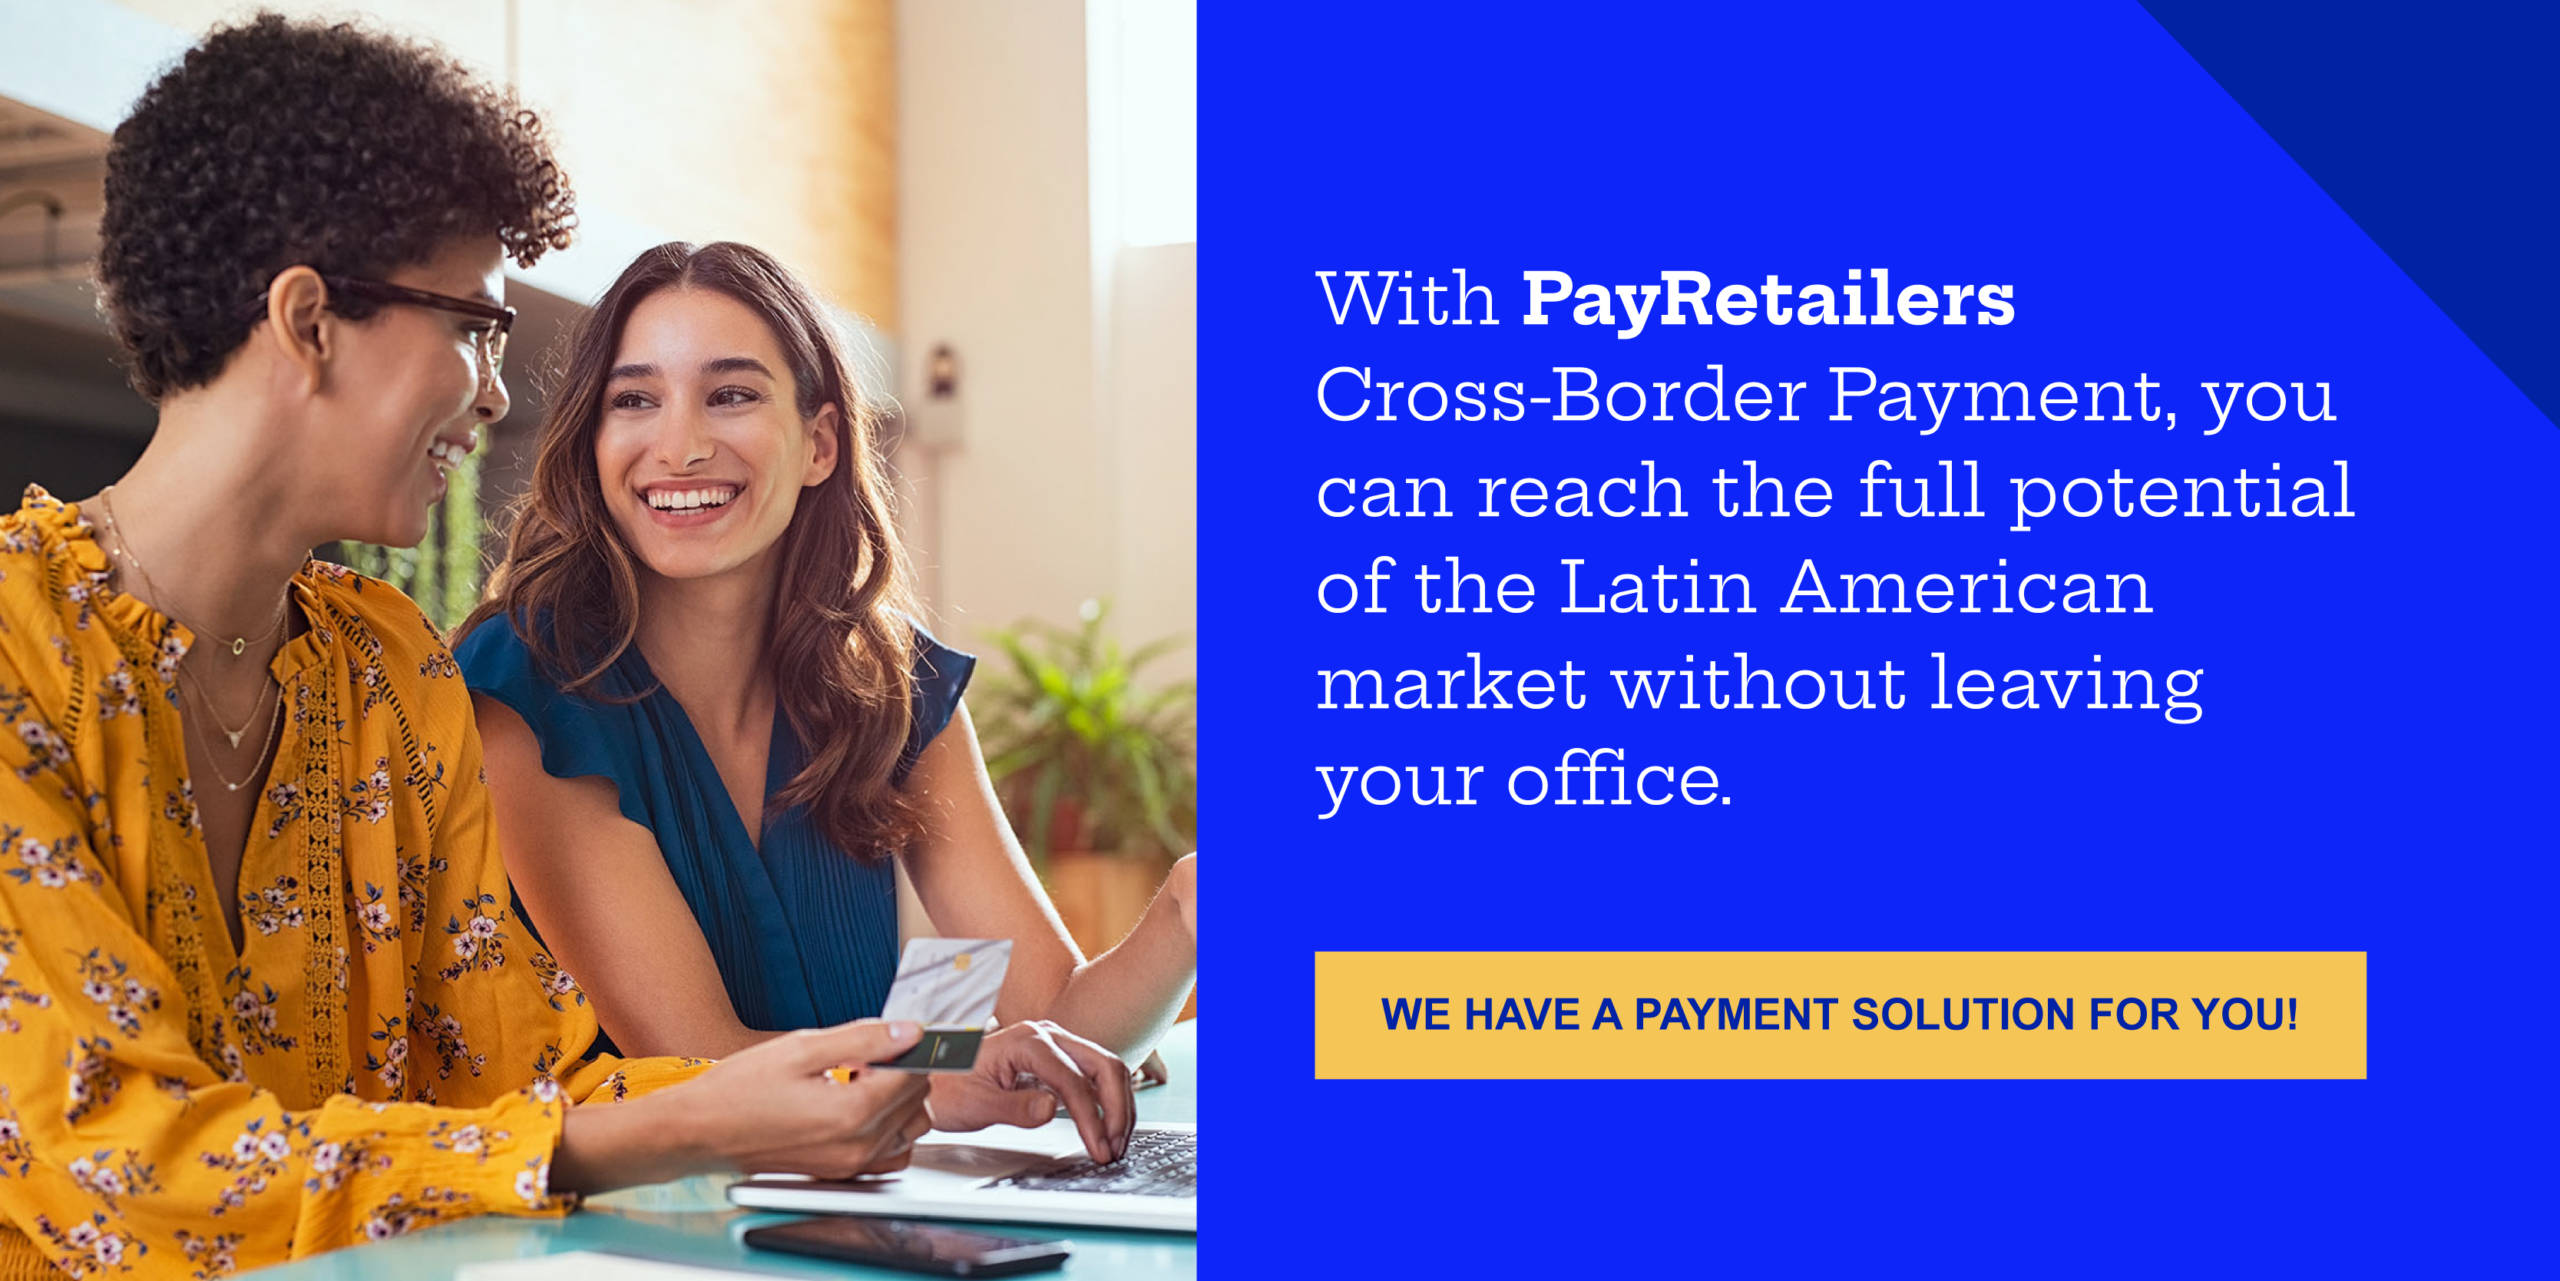 PayRetailers - Tu plataforma de pago en América Latina